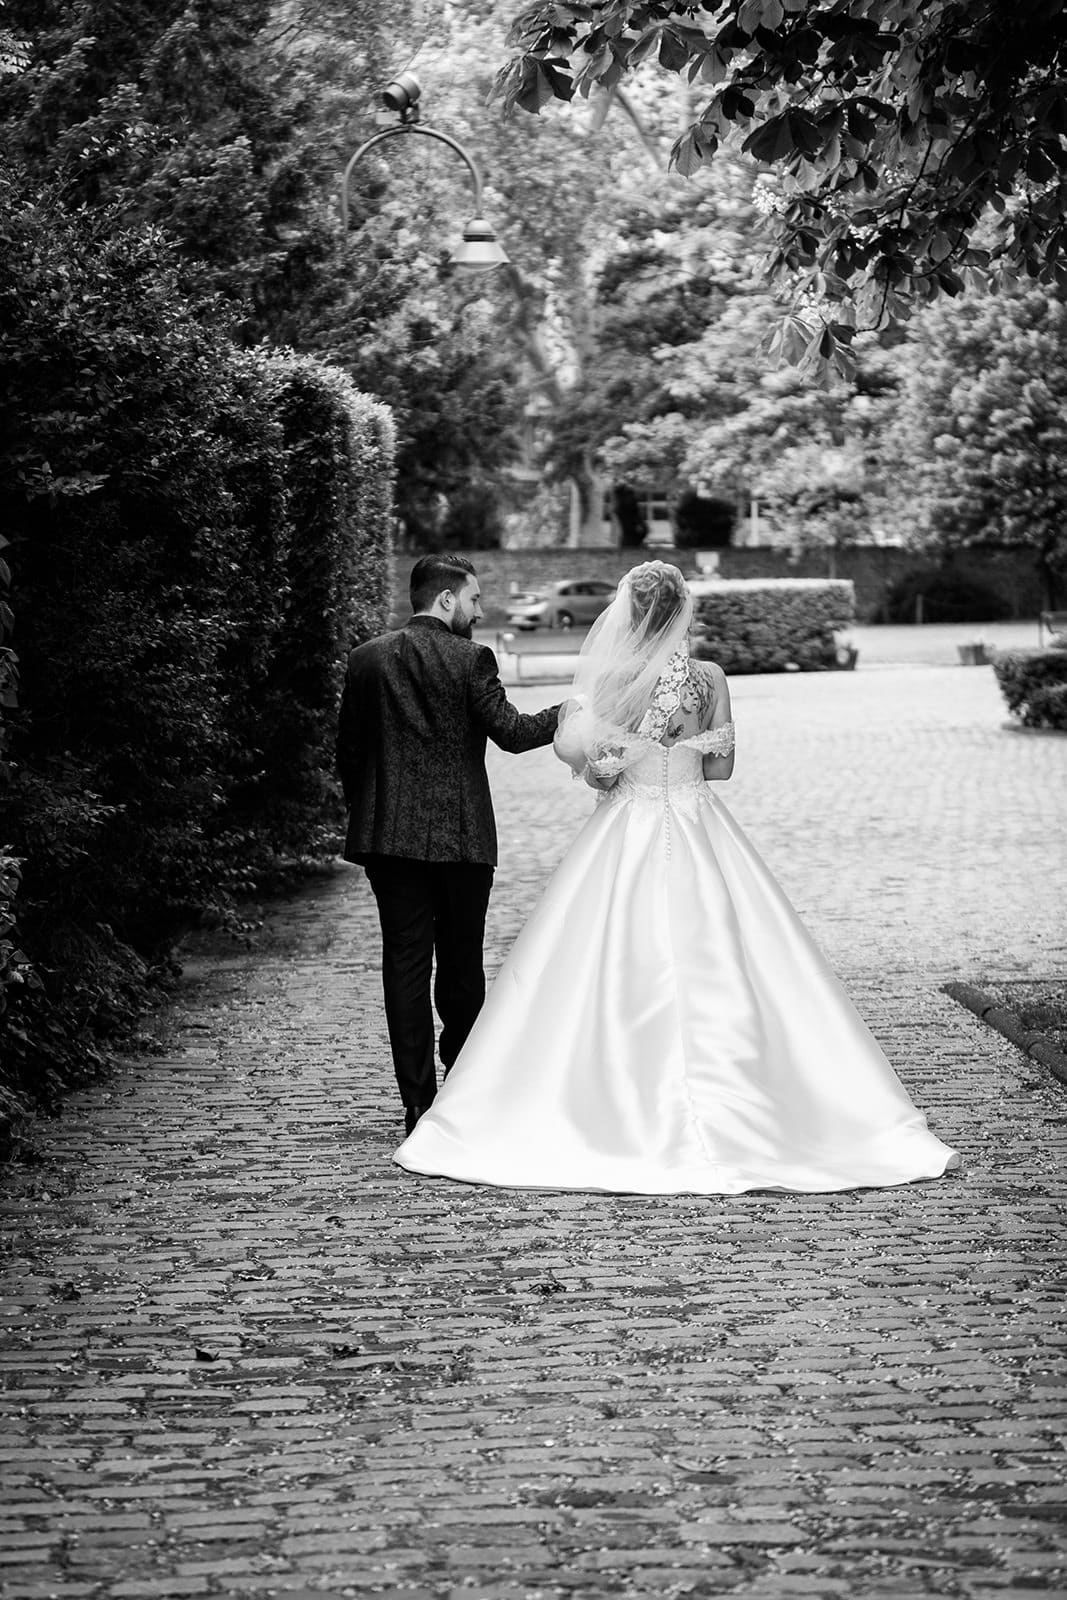 Tania-Flores-Photography-Hochzeitsfotograf-Koeln-31